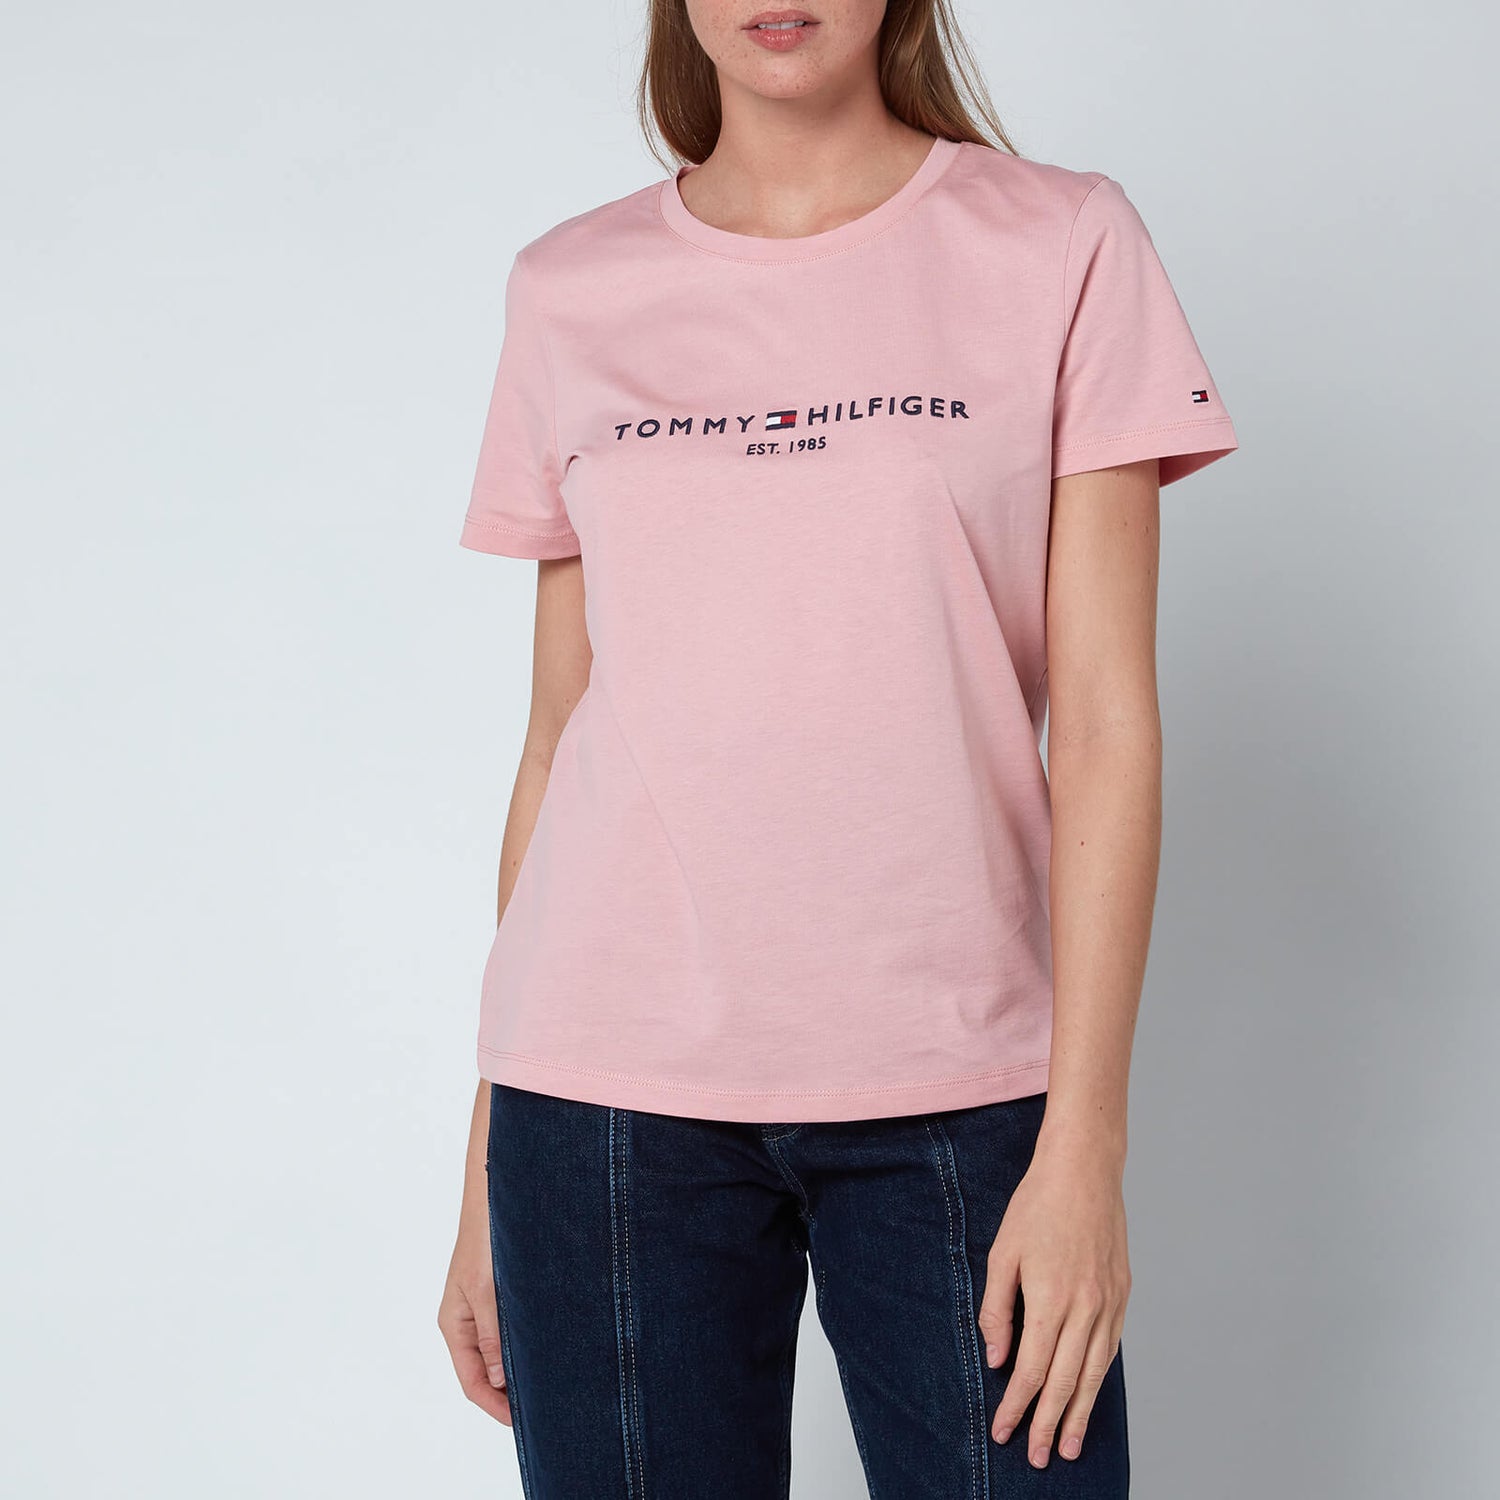 Tommy Hilfiger Women's Relaxed Hilfiger Crewneck T-Shirt - Glacier Pink